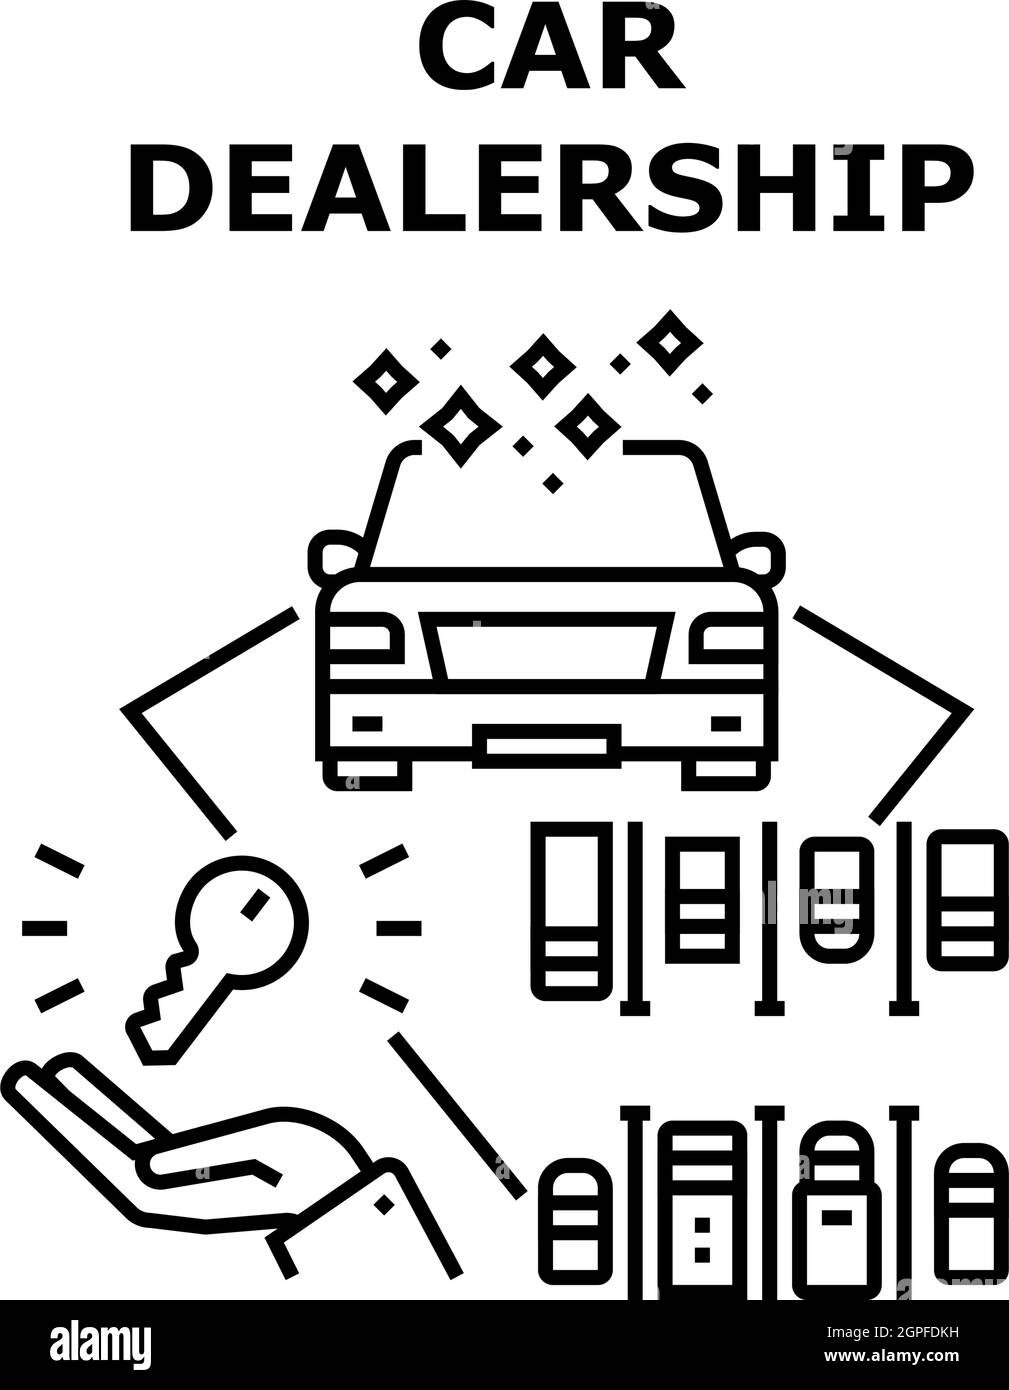 Car Dealership Vector Concept Black Illustration Stock Vector